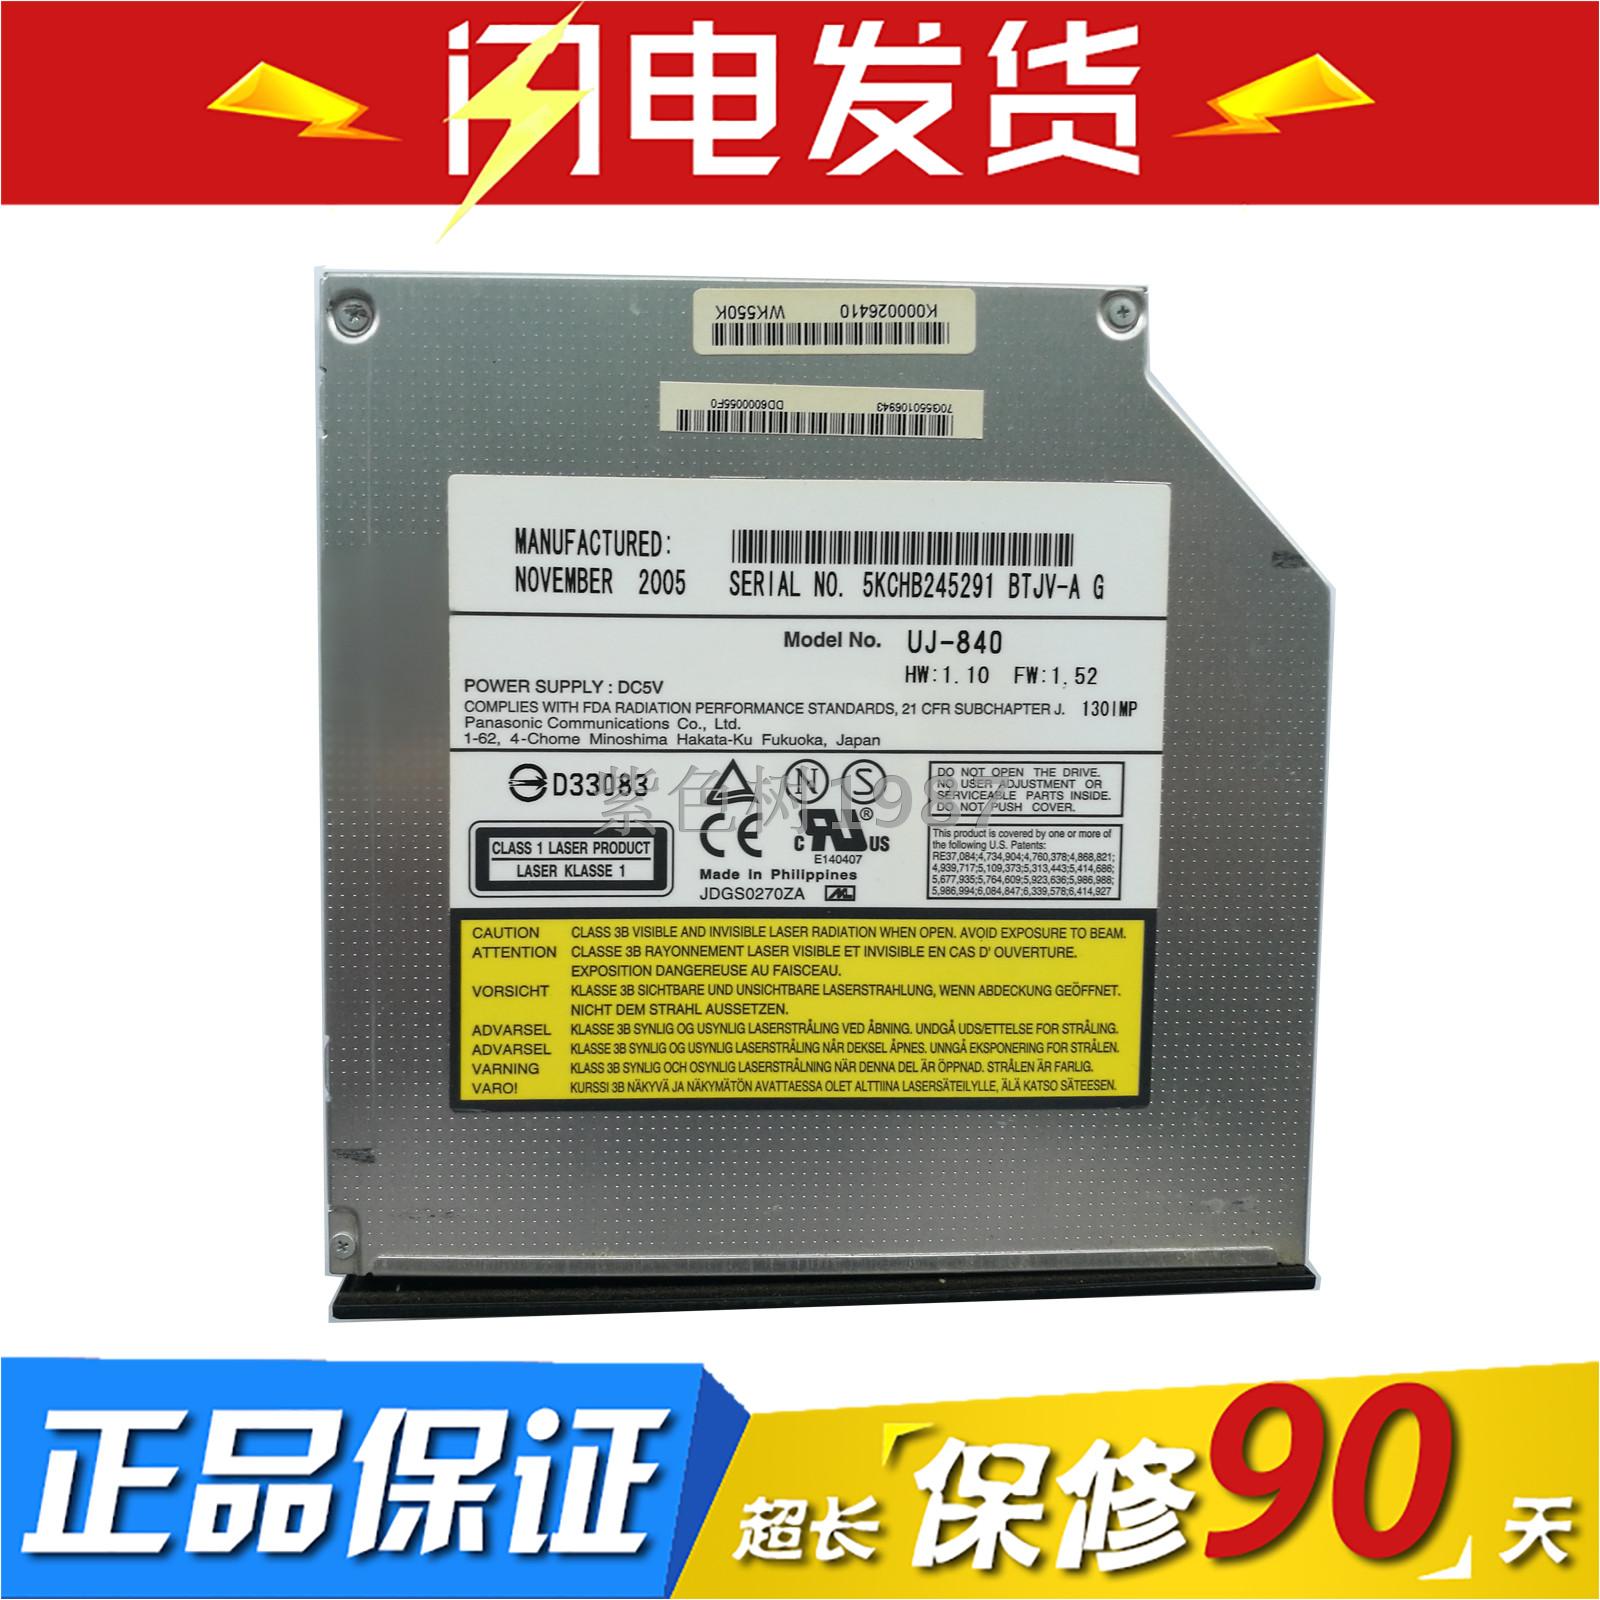 General Panasonic UJ-840 UJ850 UJ-860 UJ-870 DVD recorder parallel port CD-ROM 12.7mm